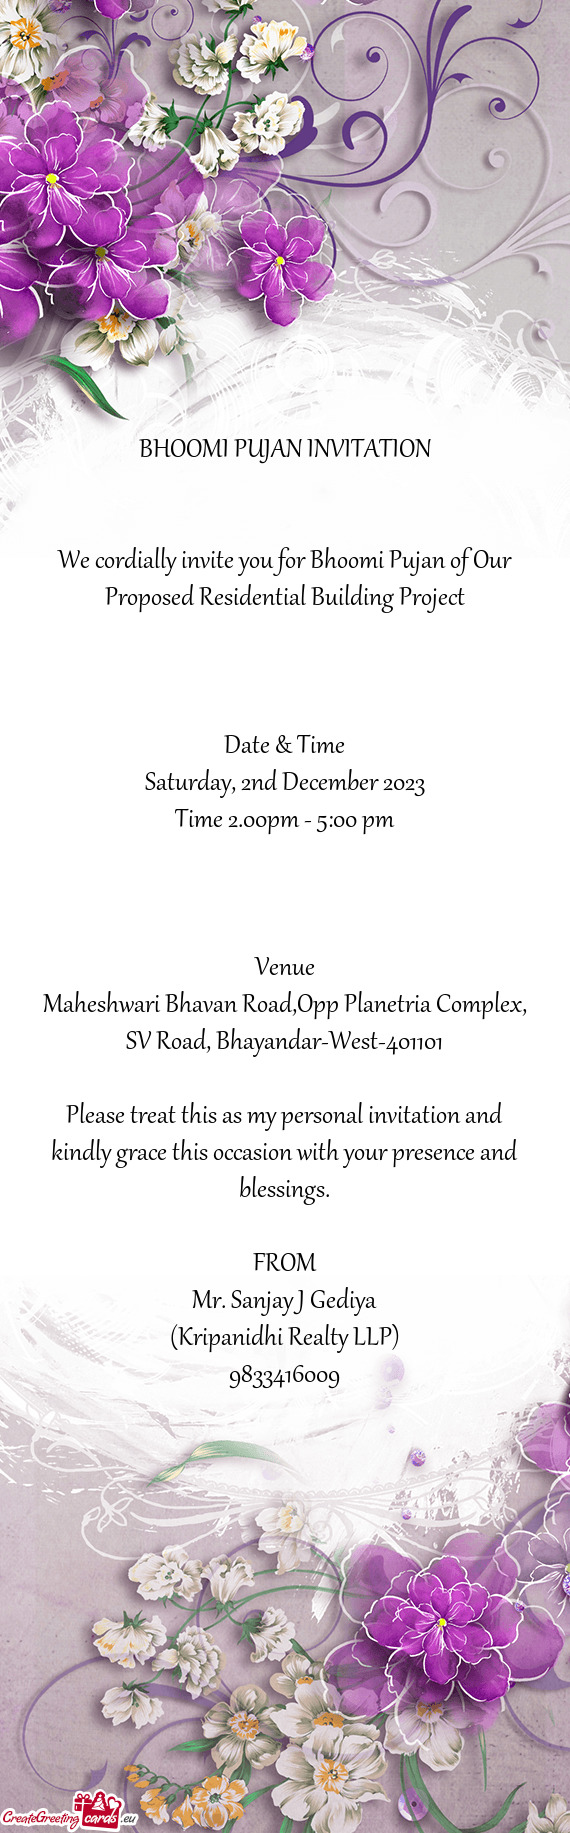 Maheshwari Bhavan Road,Opp Planetria Complex, SV Road, Bhayandar-West-401101